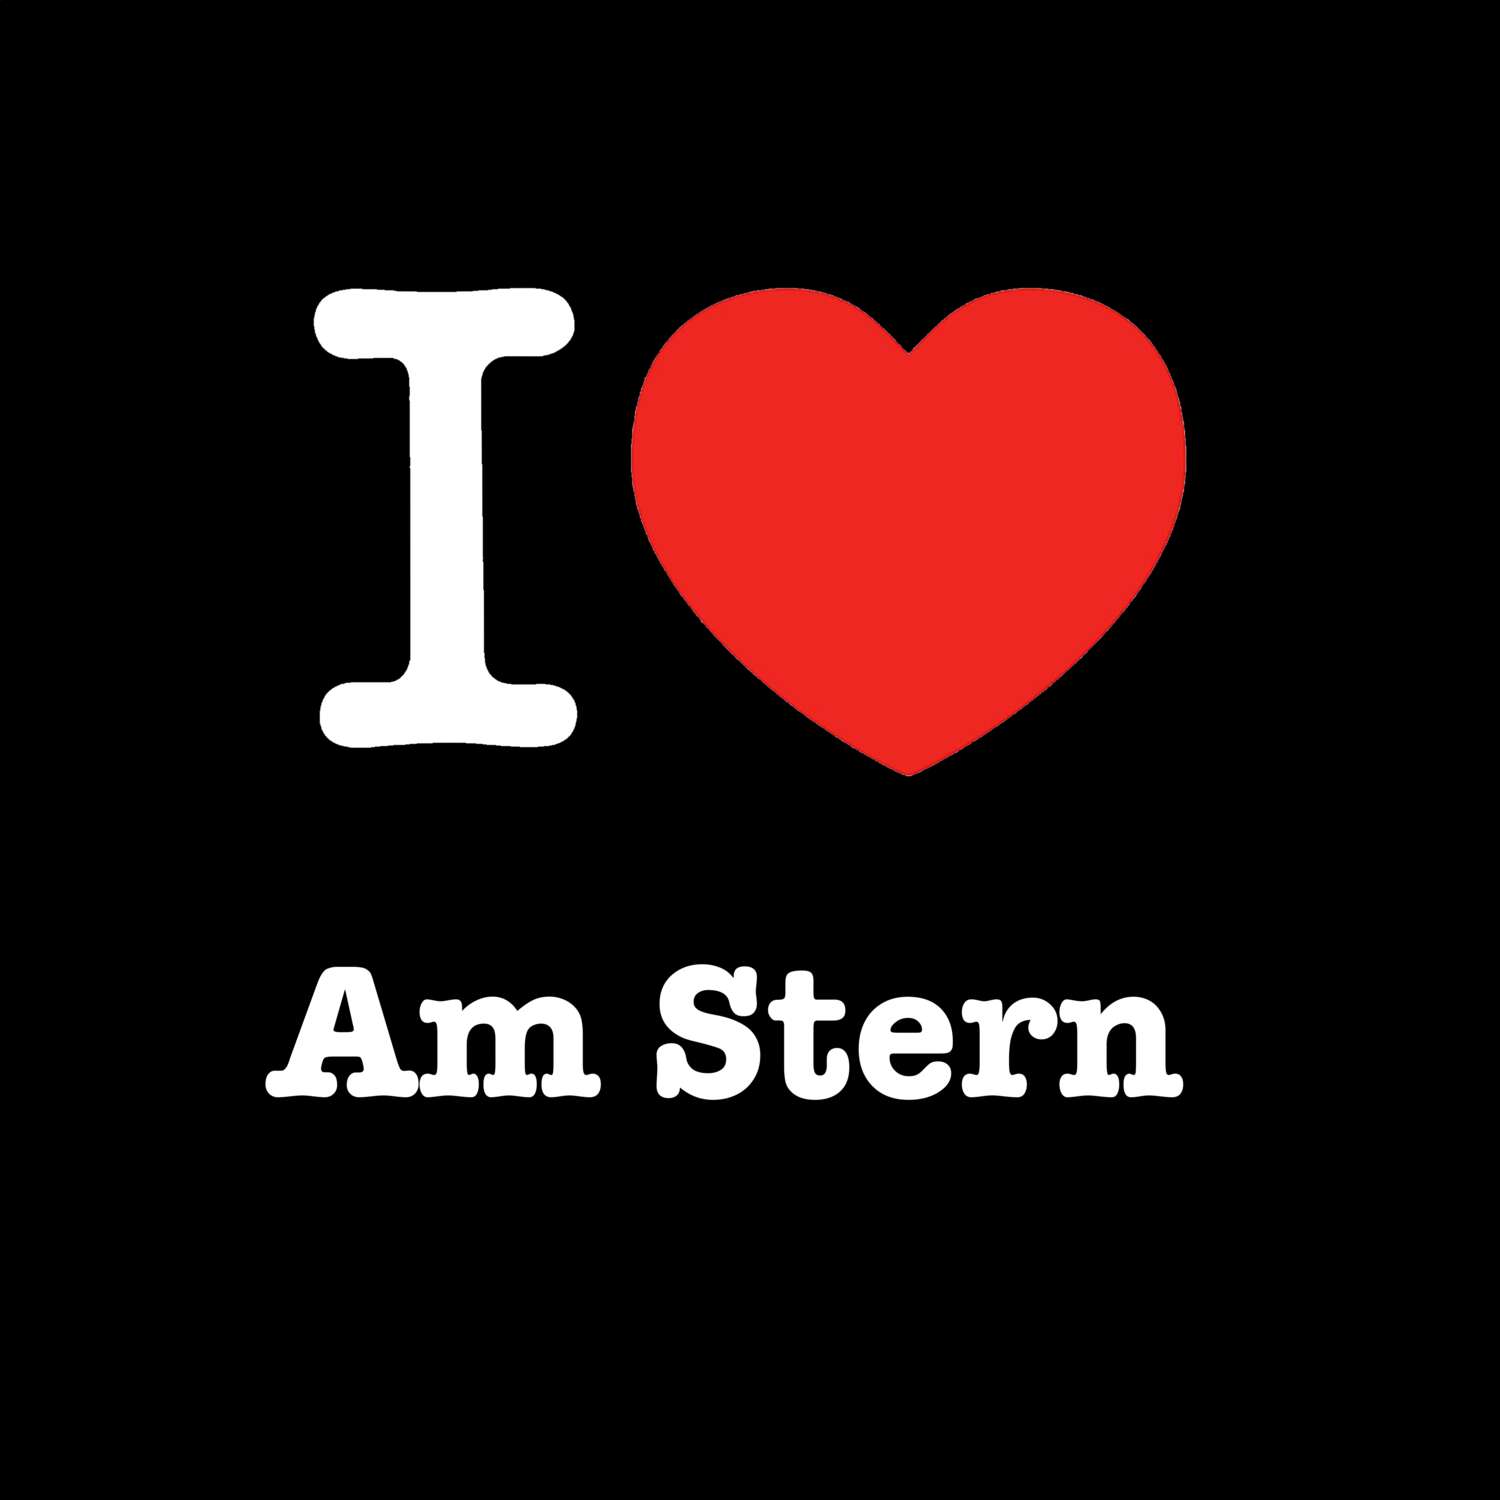 Am Stern T-Shirt »I love«